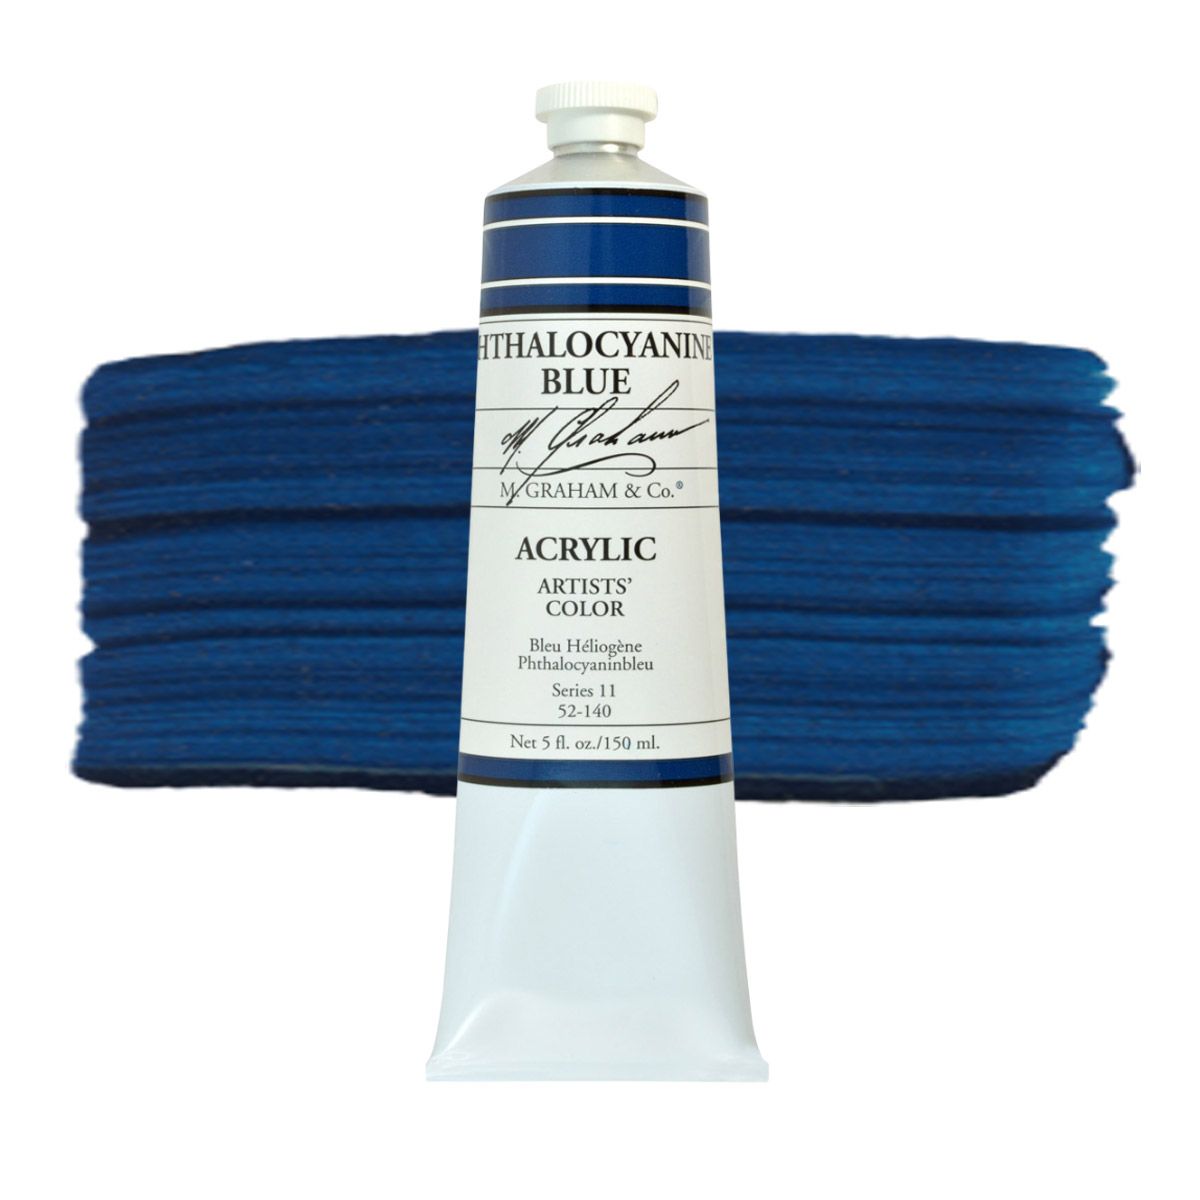 M Graham Acrylic - Phthalocyanine Blue 150 ml